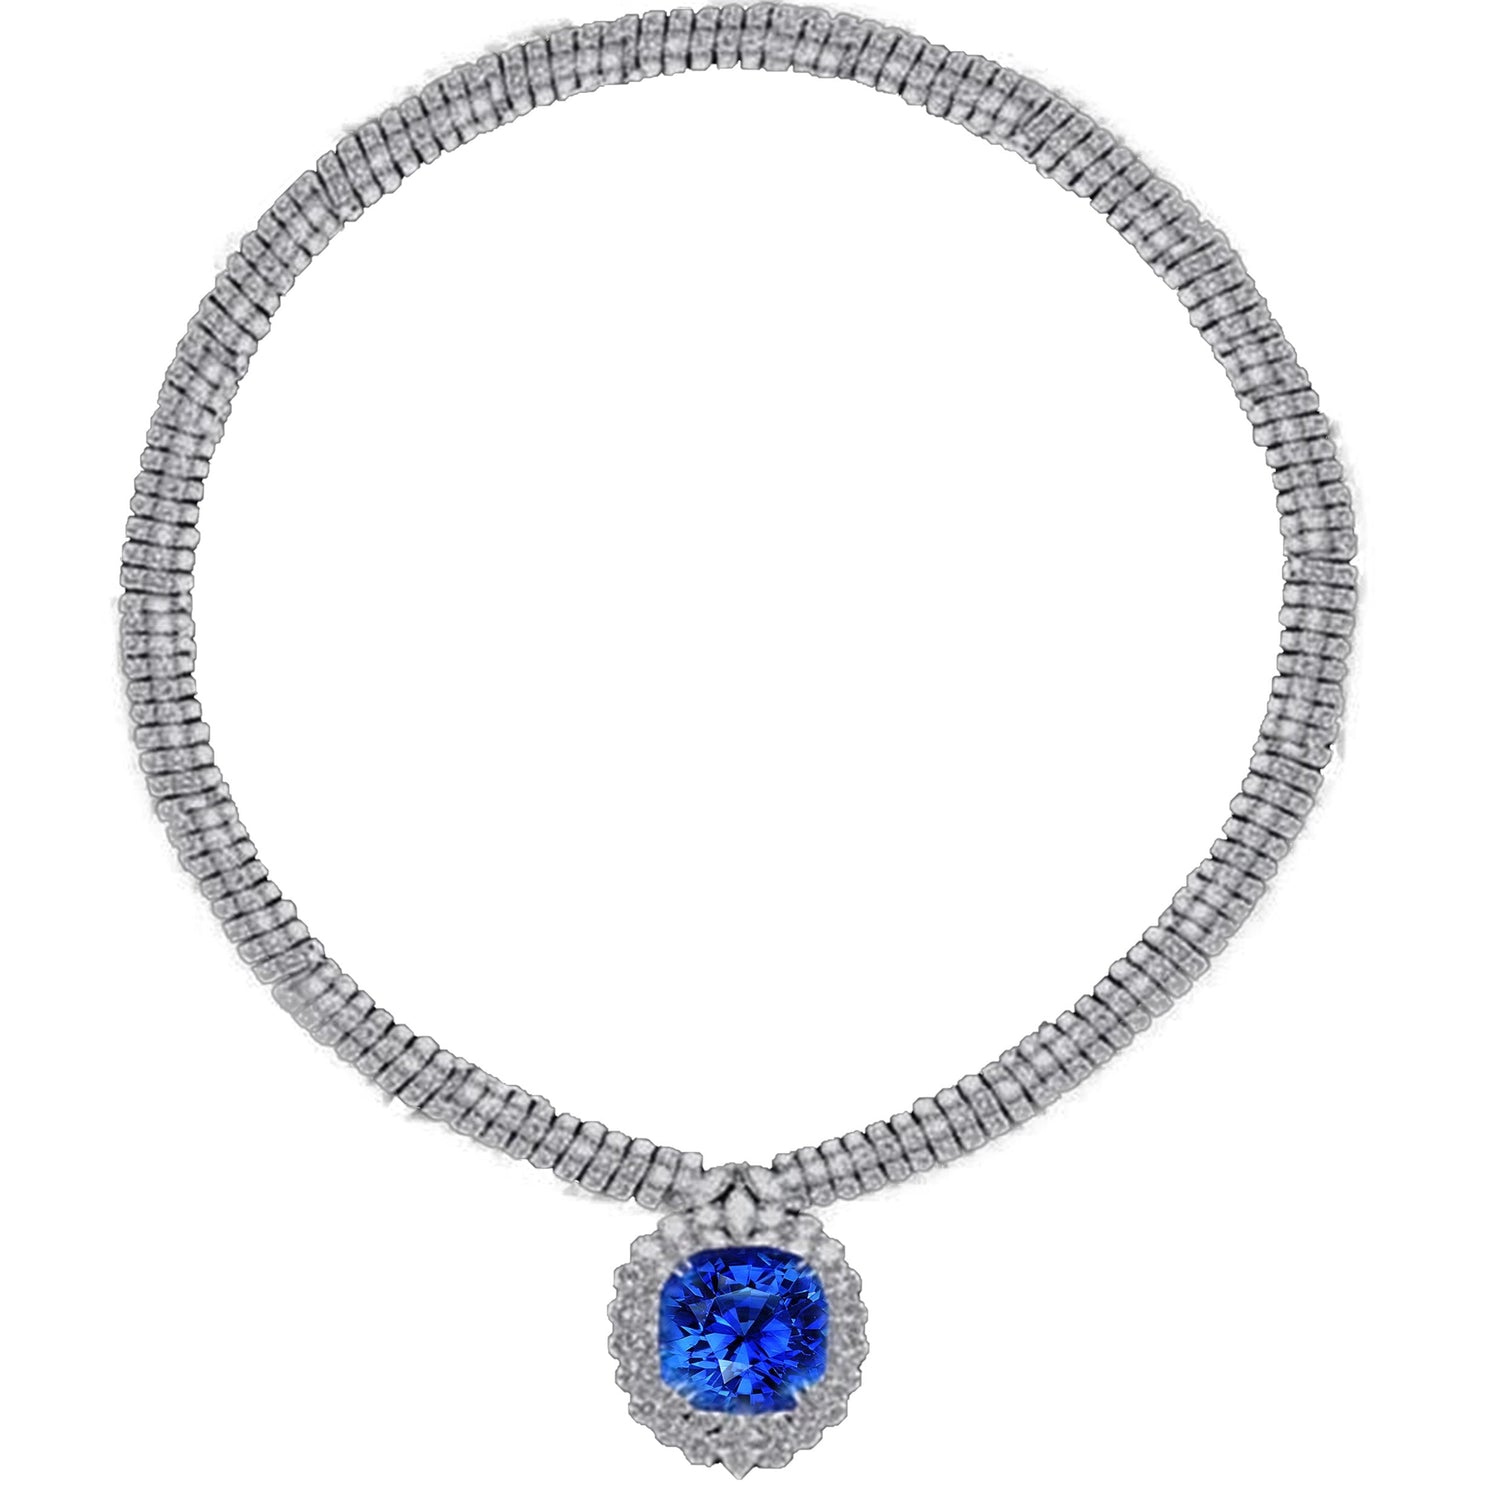 Collana in platino con diamanti bianchi e zaffiro blu da 45 carati - harrychadent.it